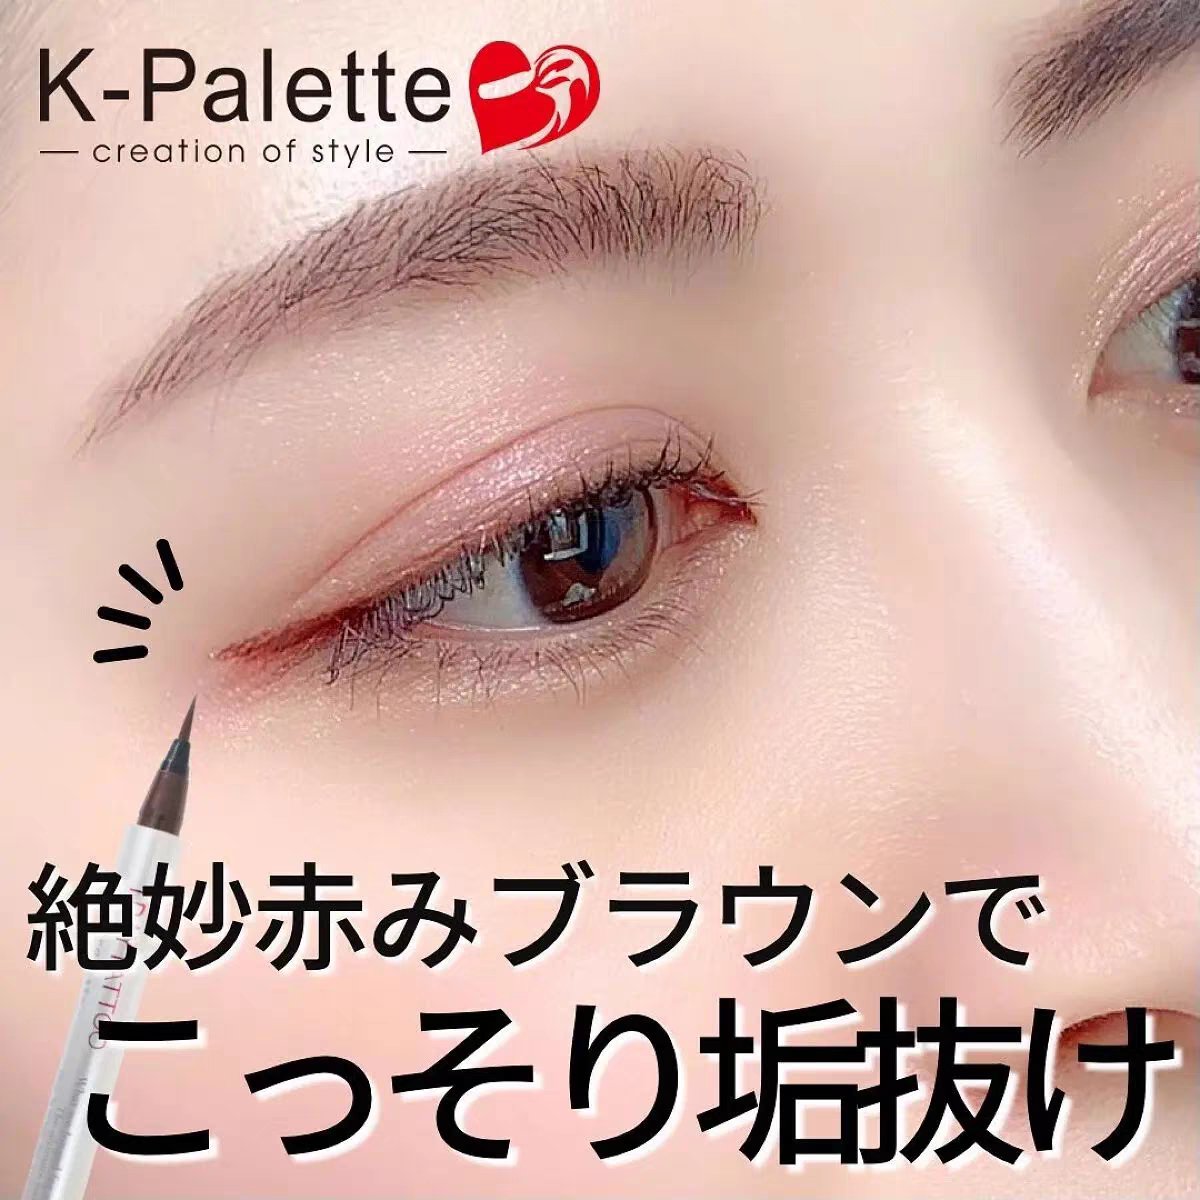 K-Palette 1Day Tattoo Eyeliner - K-Palette | Kiokii and...